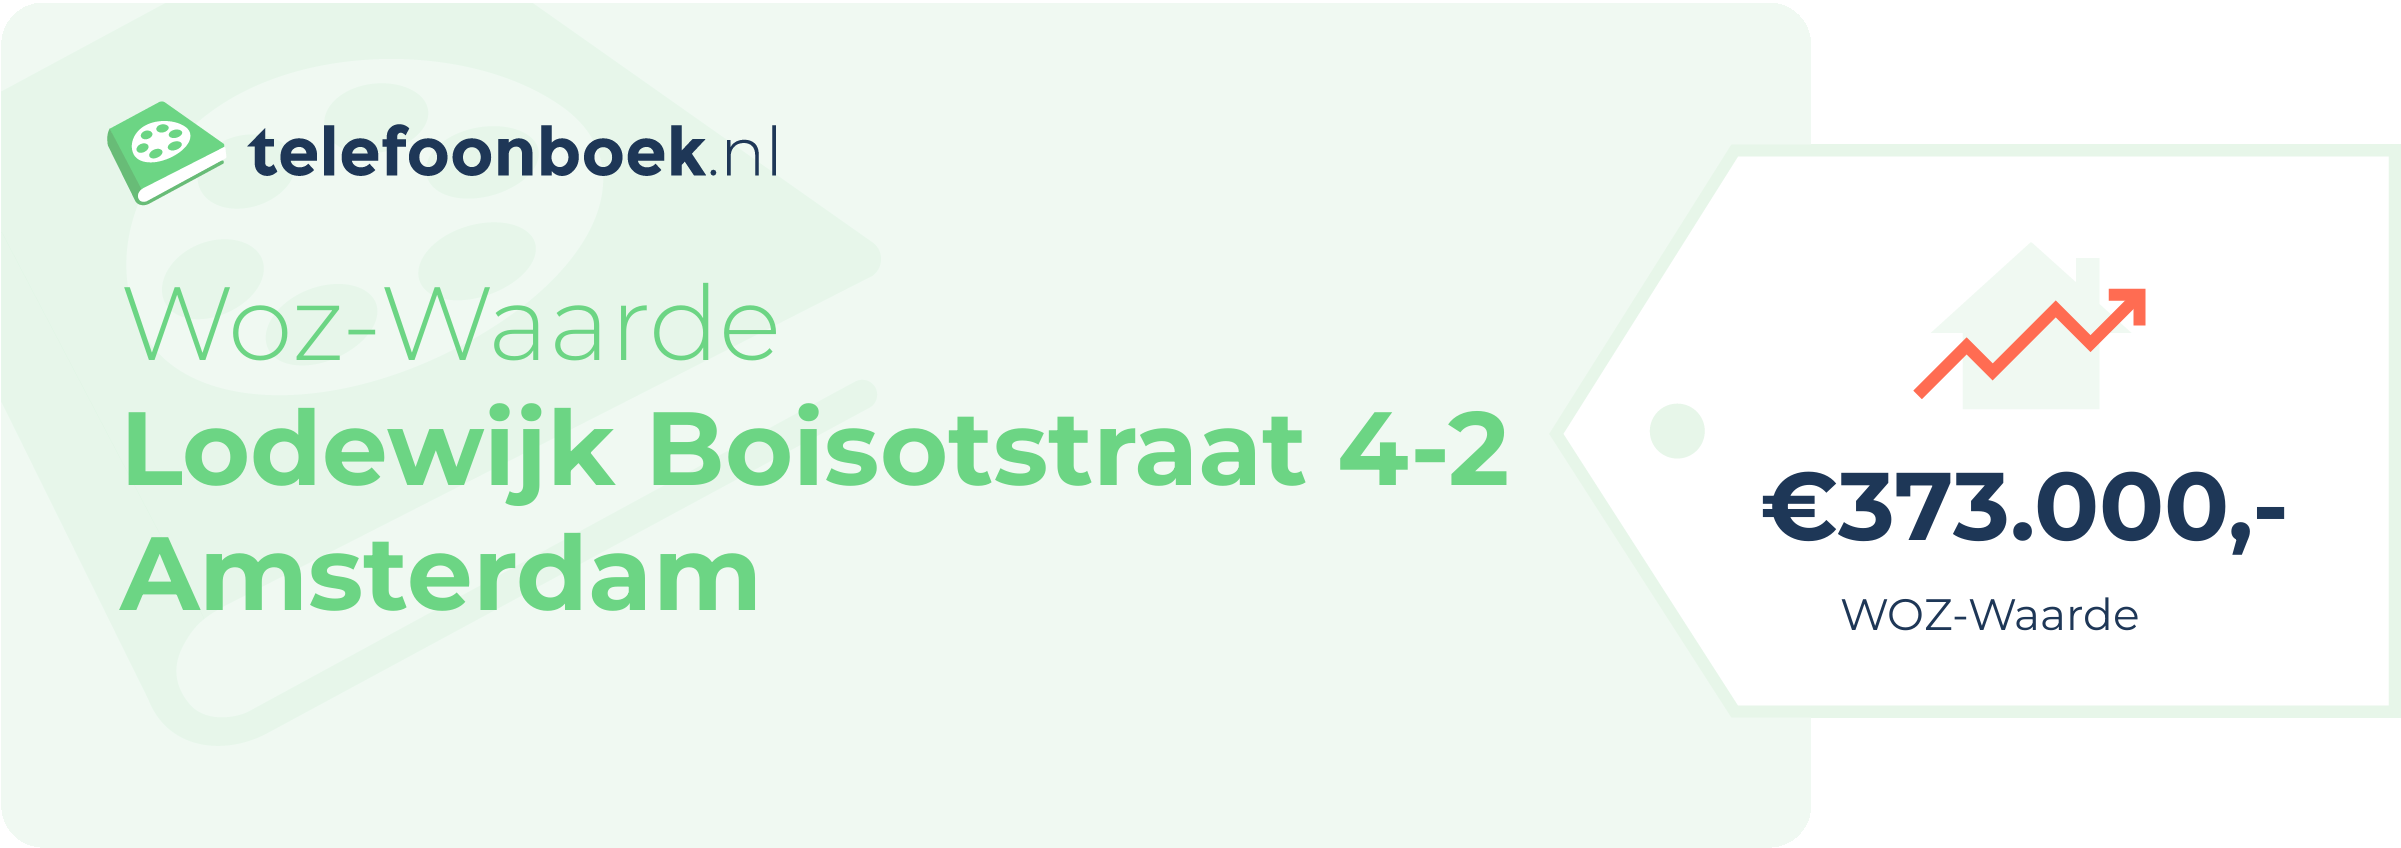 WOZ-waarde Lodewijk Boisotstraat 4-2 Amsterdam